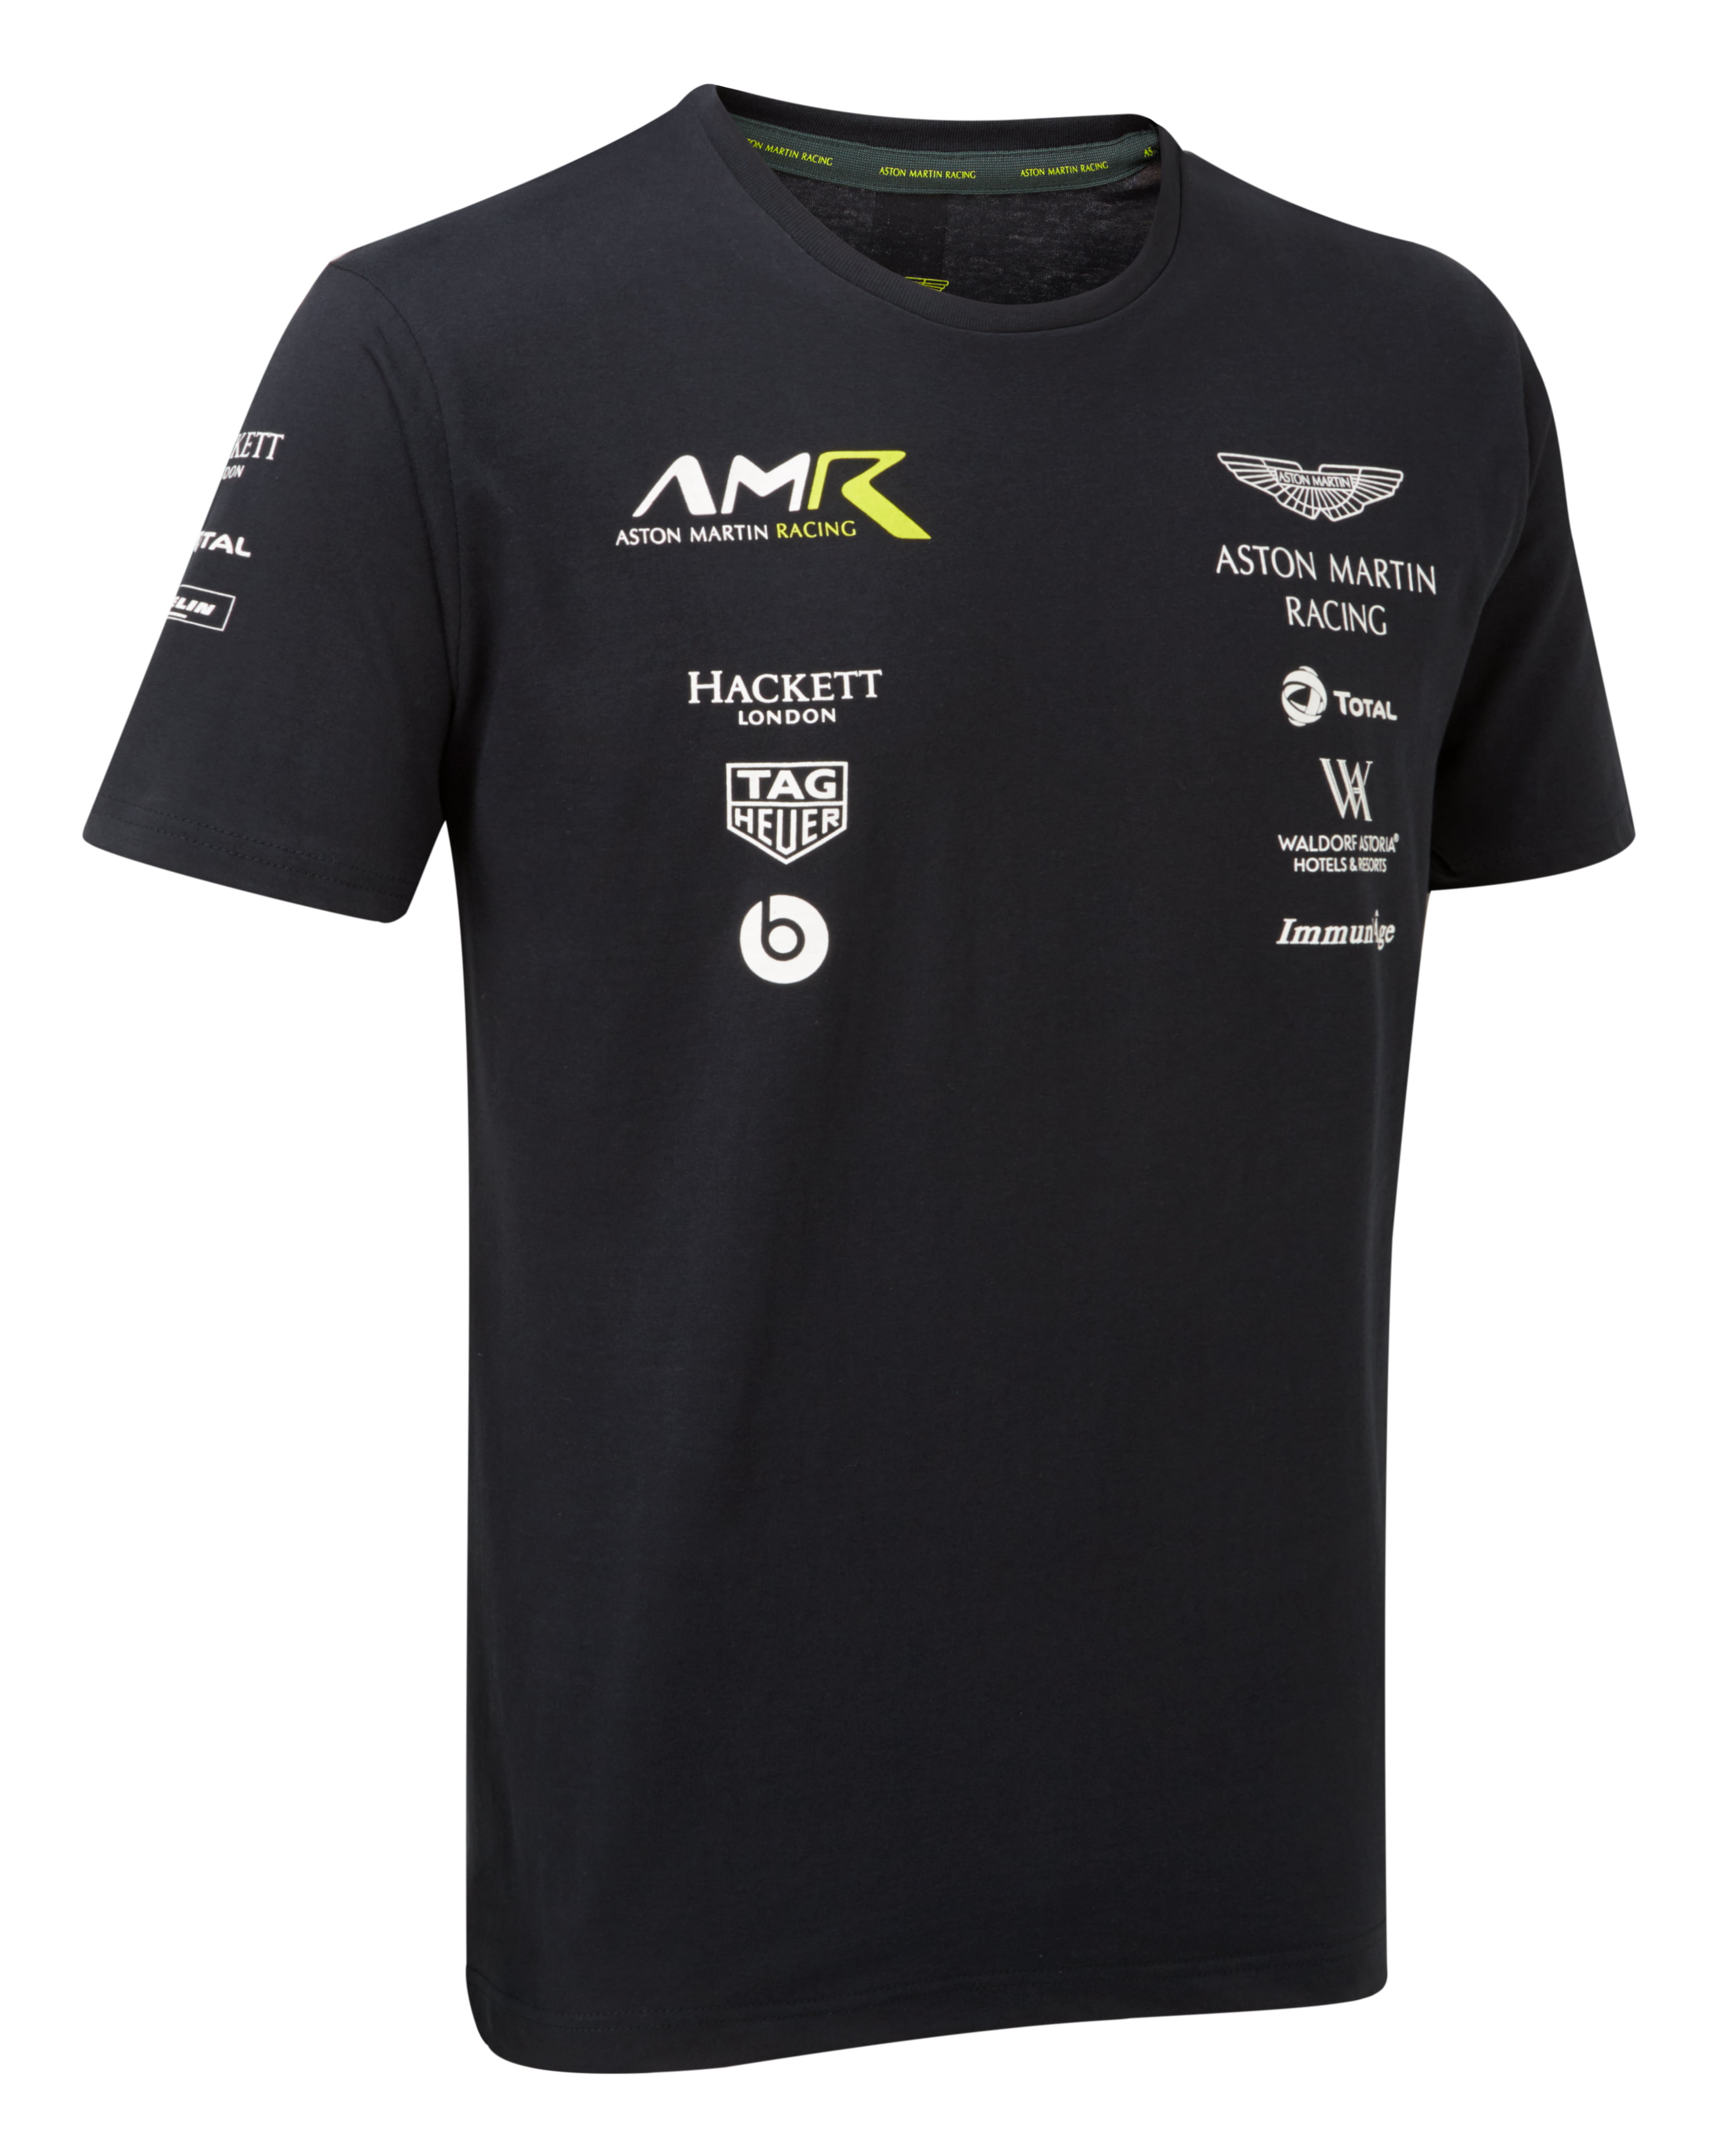 Aston Martin Racing Team Travel T-Shirt 2018 Navy ADULT 